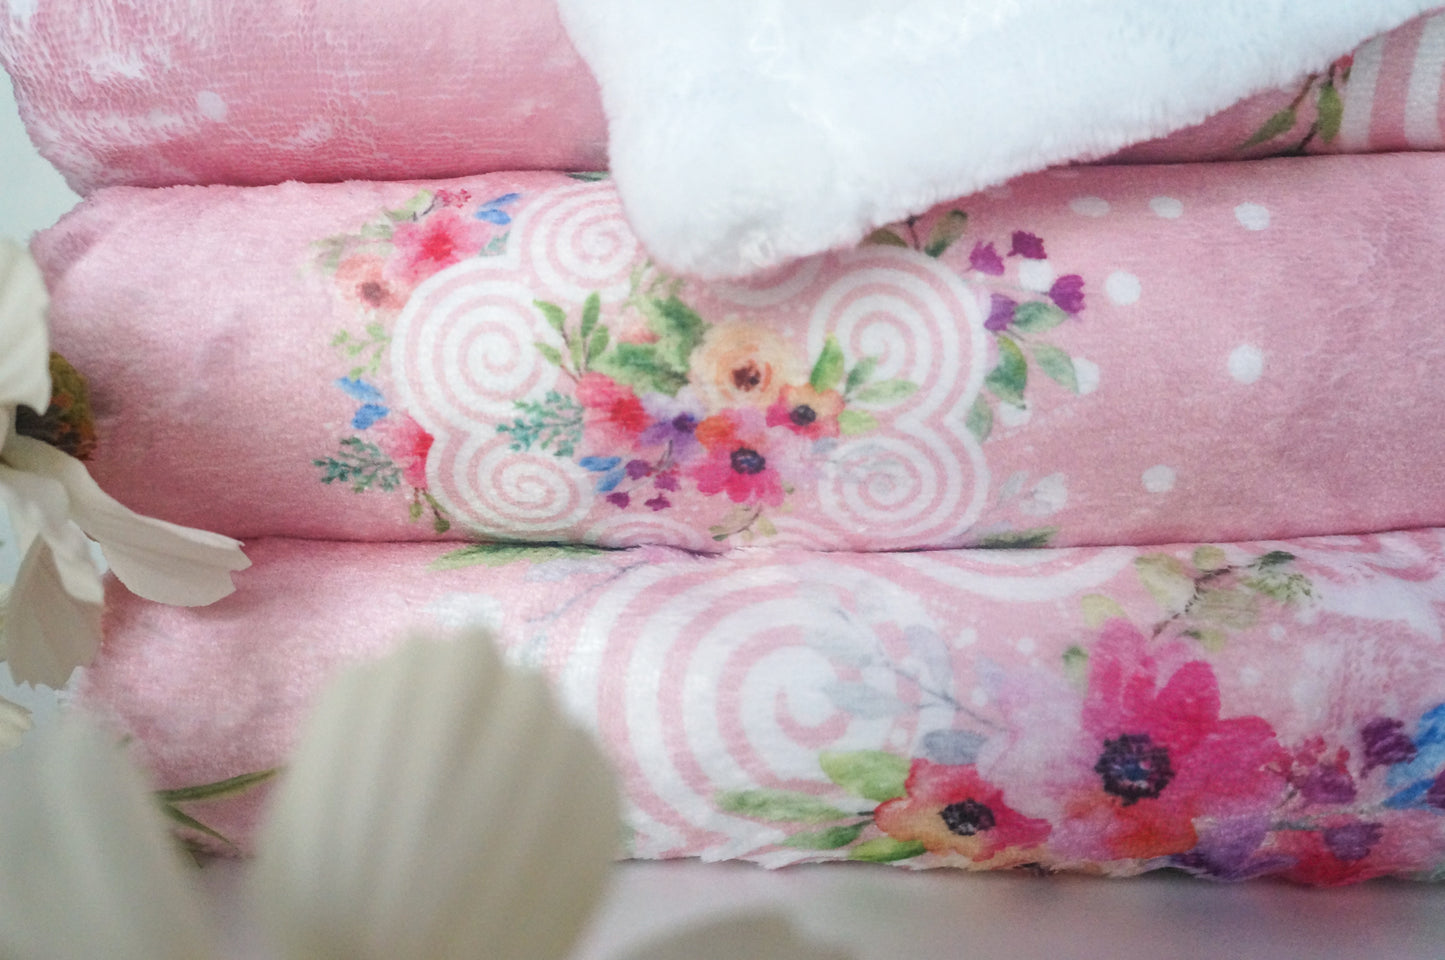 Lixam Minky Floral Blanket - Sweet